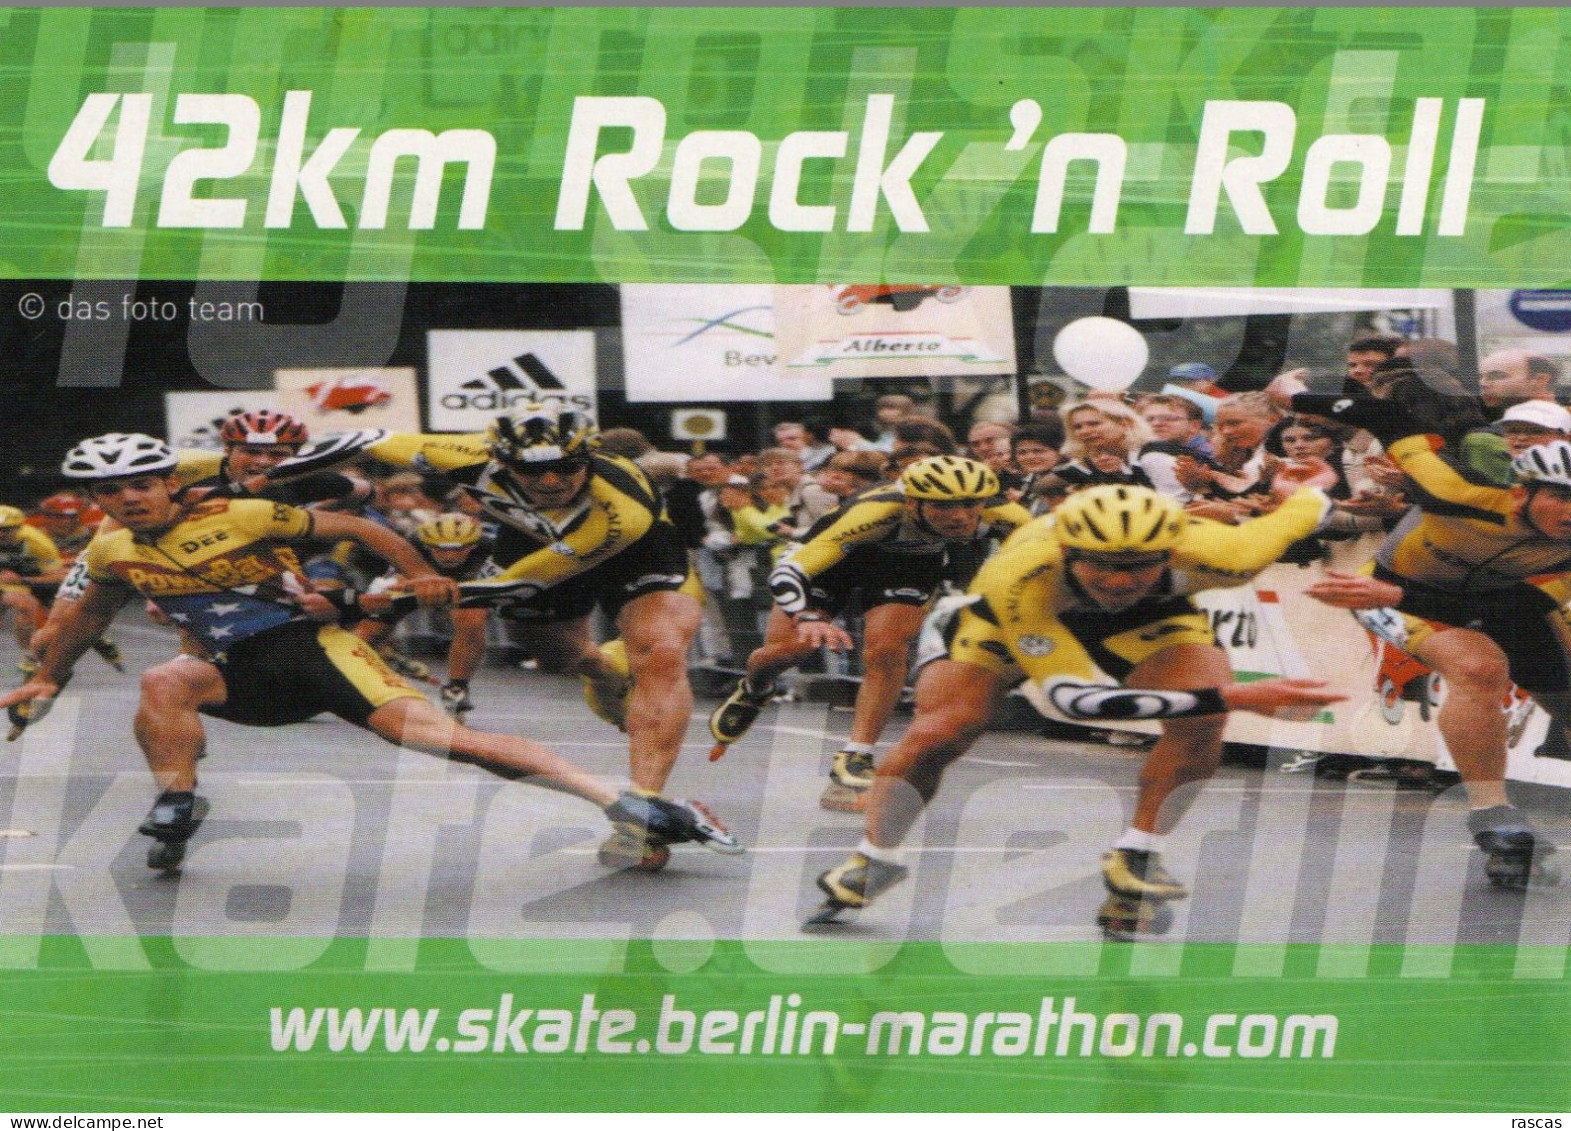 CLB - CPM - ROLLER - SKATE BERLIN MARATHON - 42 KM ROCK 'N ROLL - Athlétisme